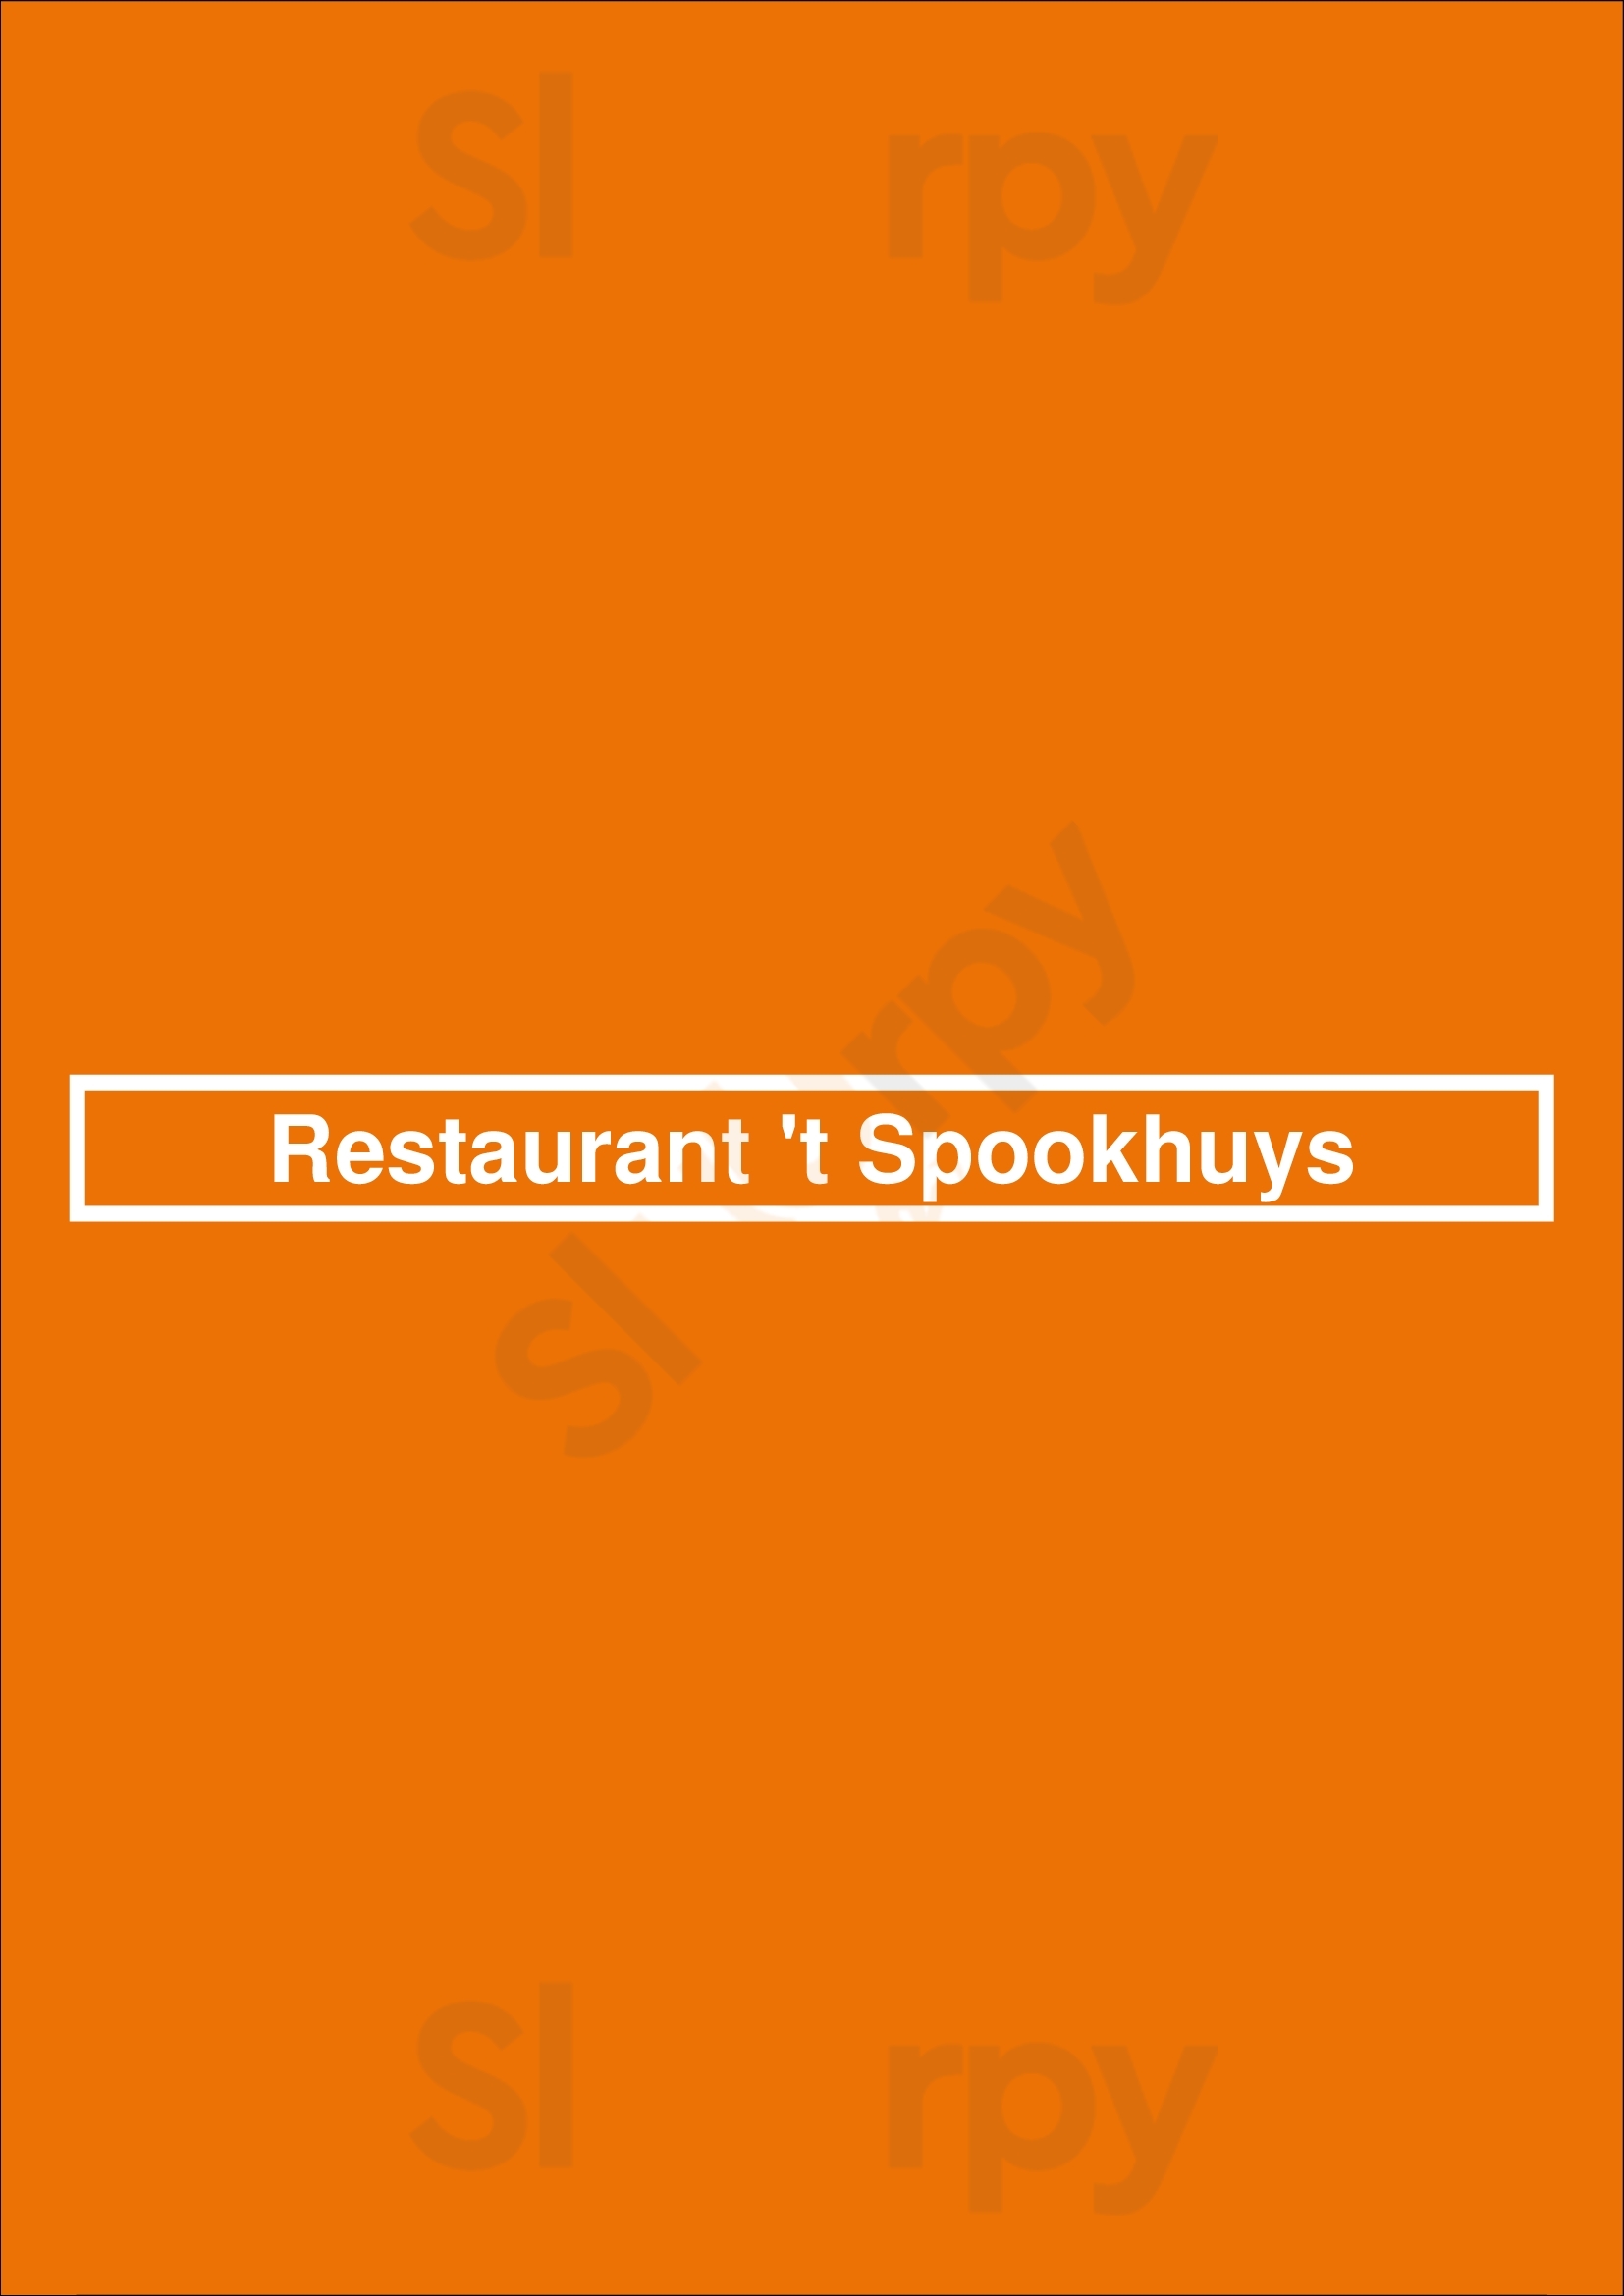 Restaurant 't Spookhuys Hattem Menu - 1